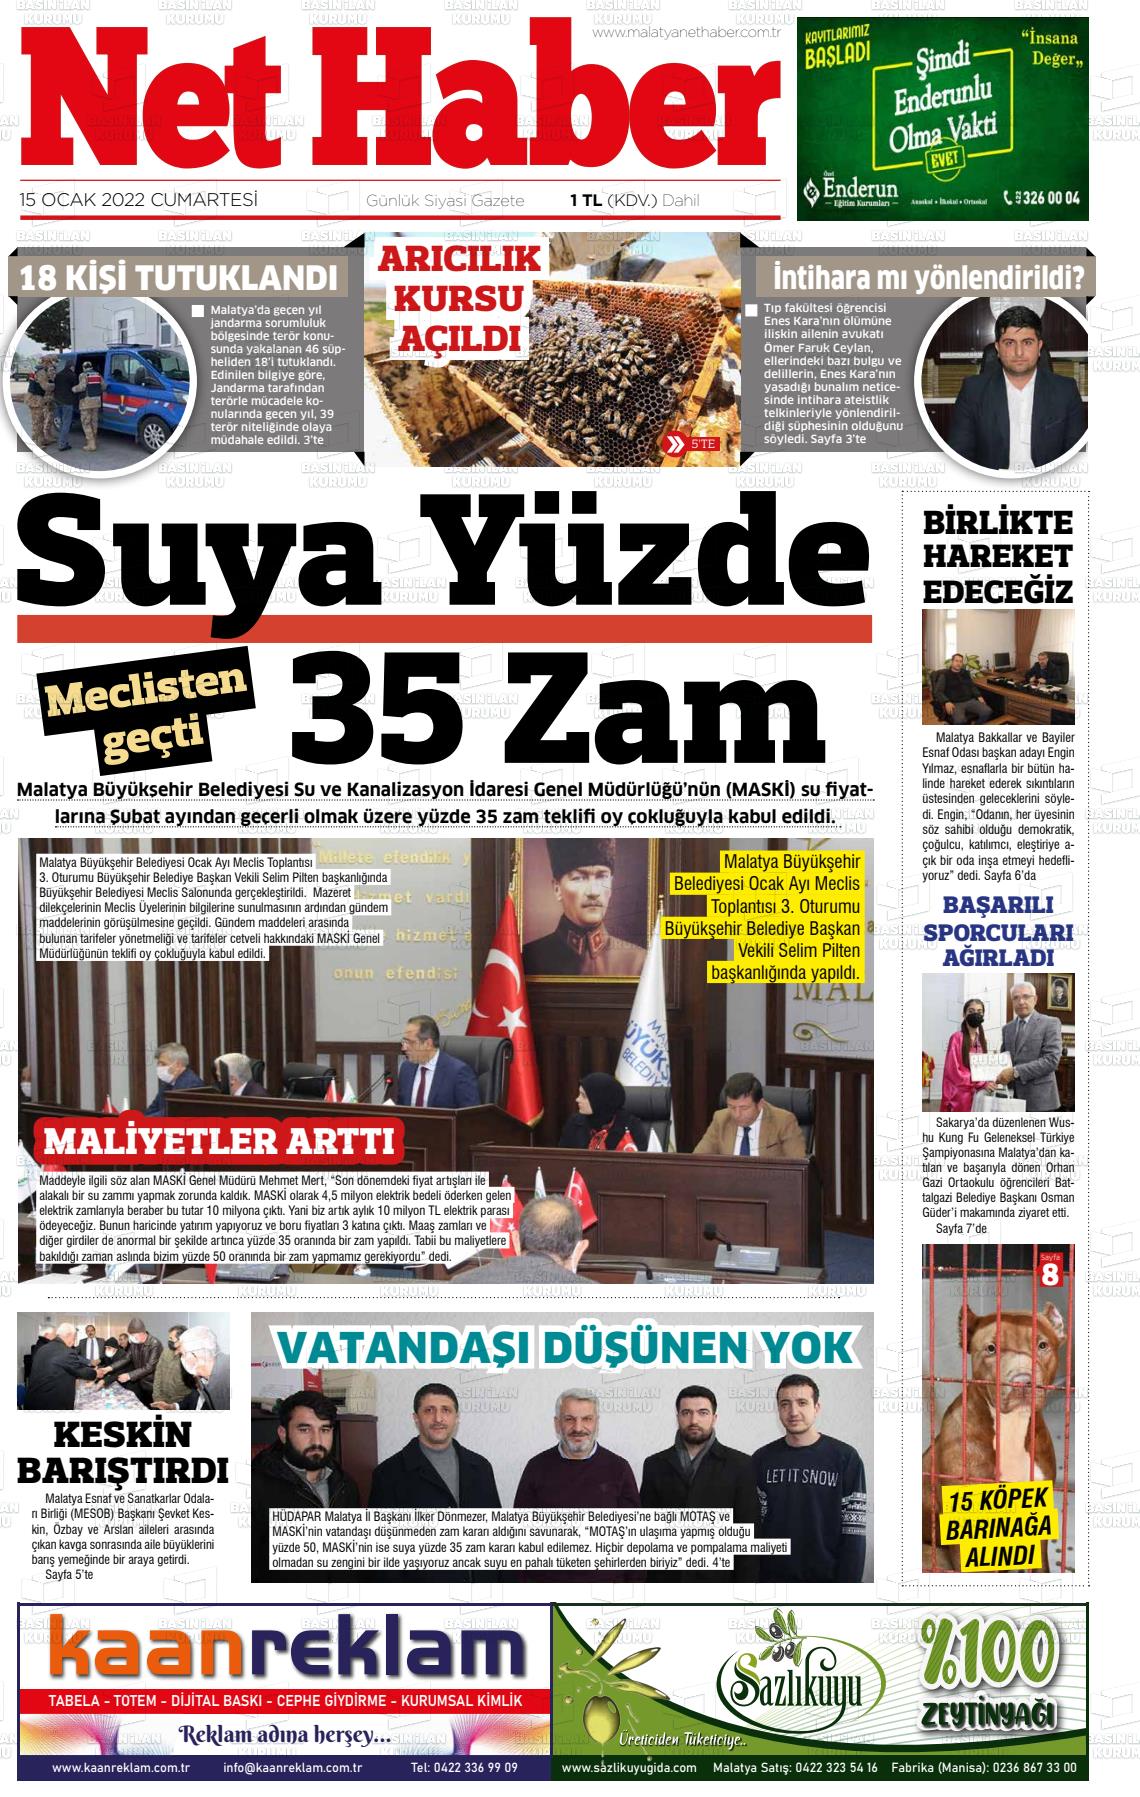 15 Ocak 2022 MALATYA NET HABER Gazete Manşeti